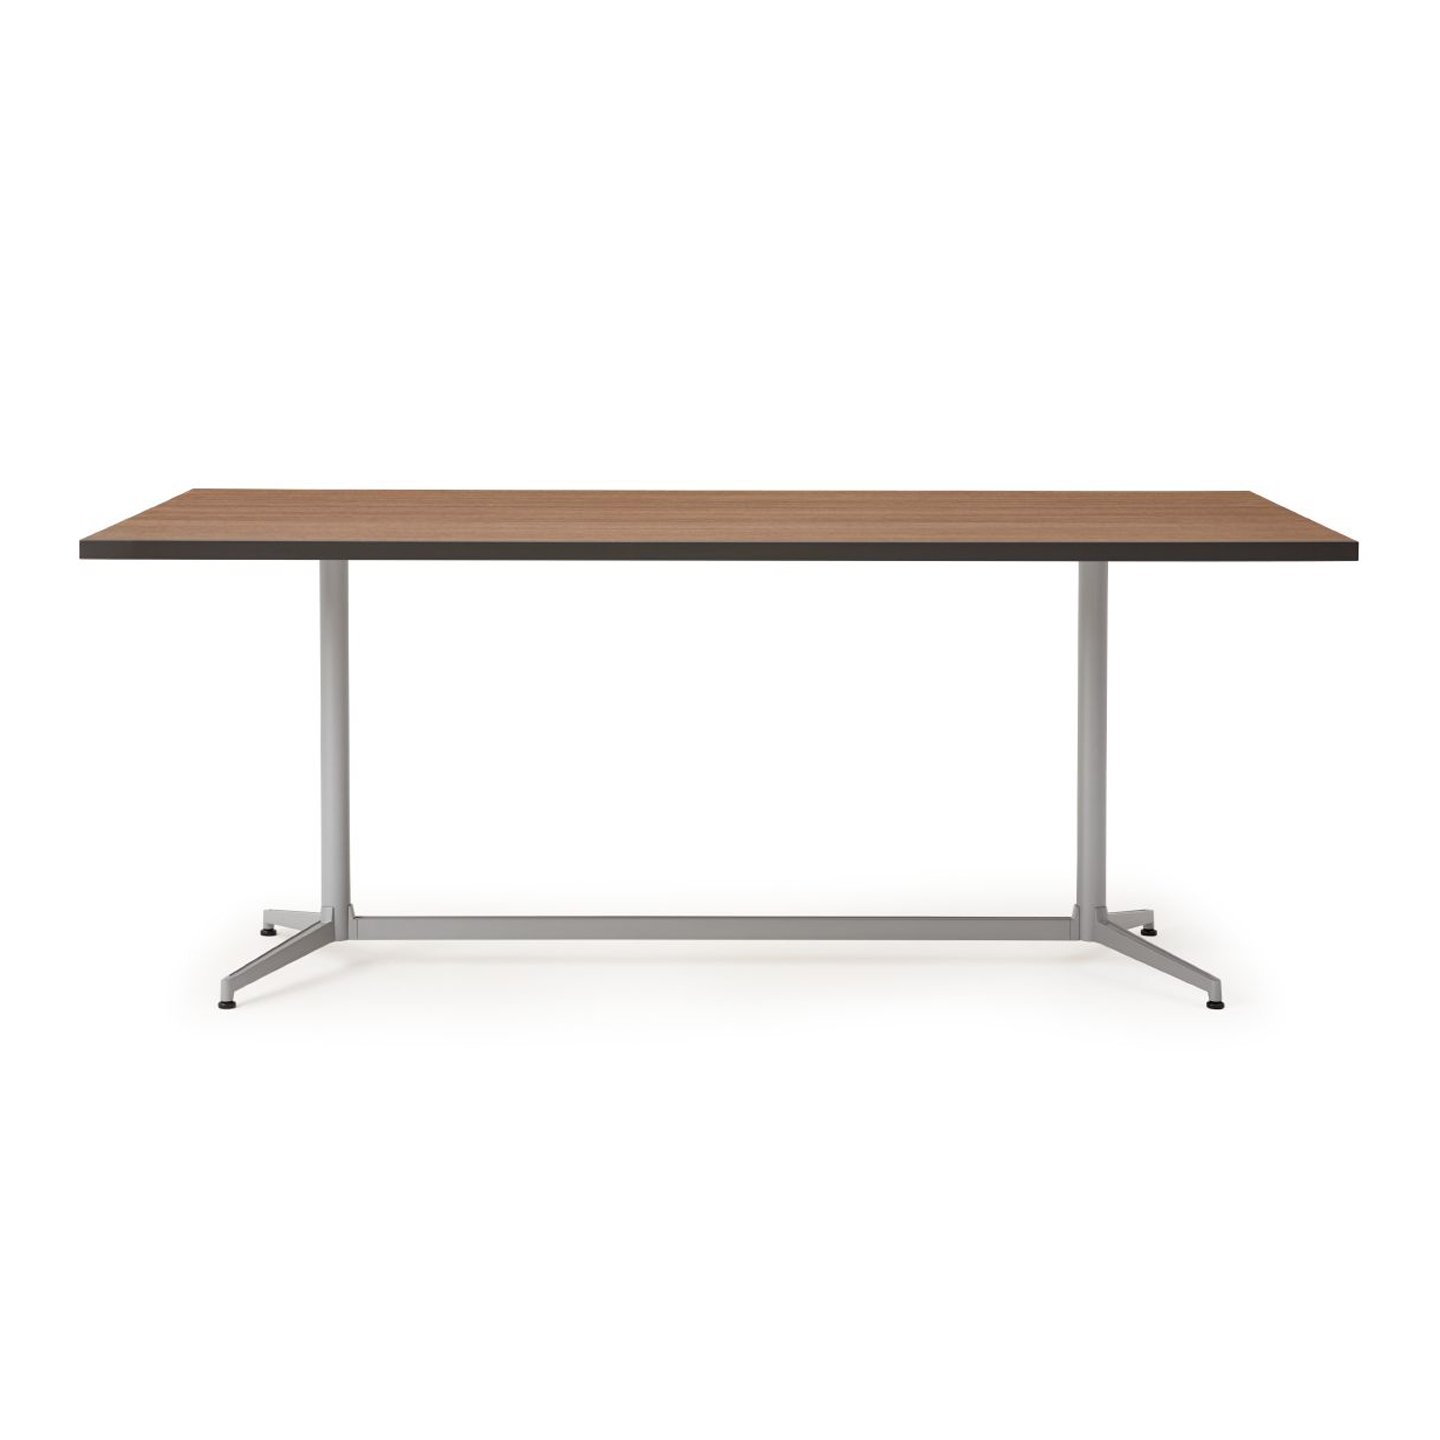 Haworth Jive Whitesweep Table with wood rectangular top and height adjustable legs